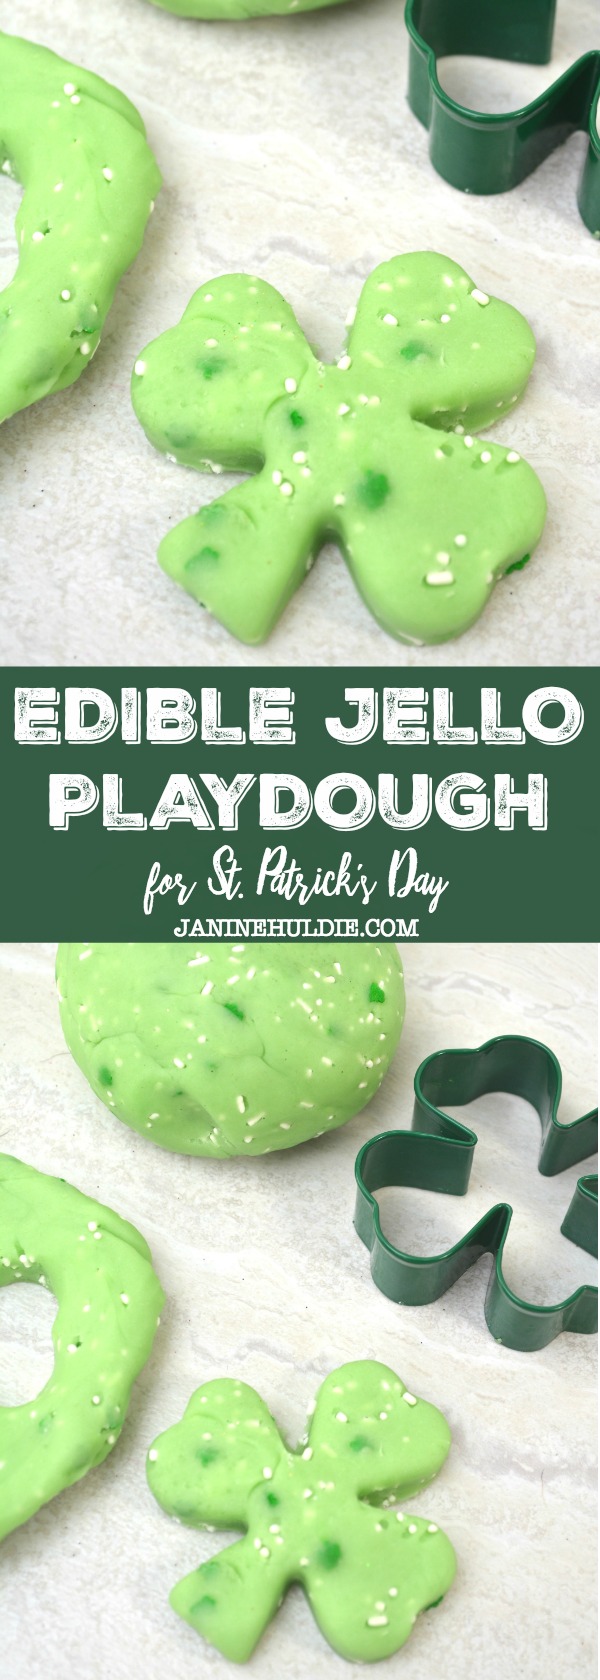 Green Edible Jello Playdough for St. Patrick's Day